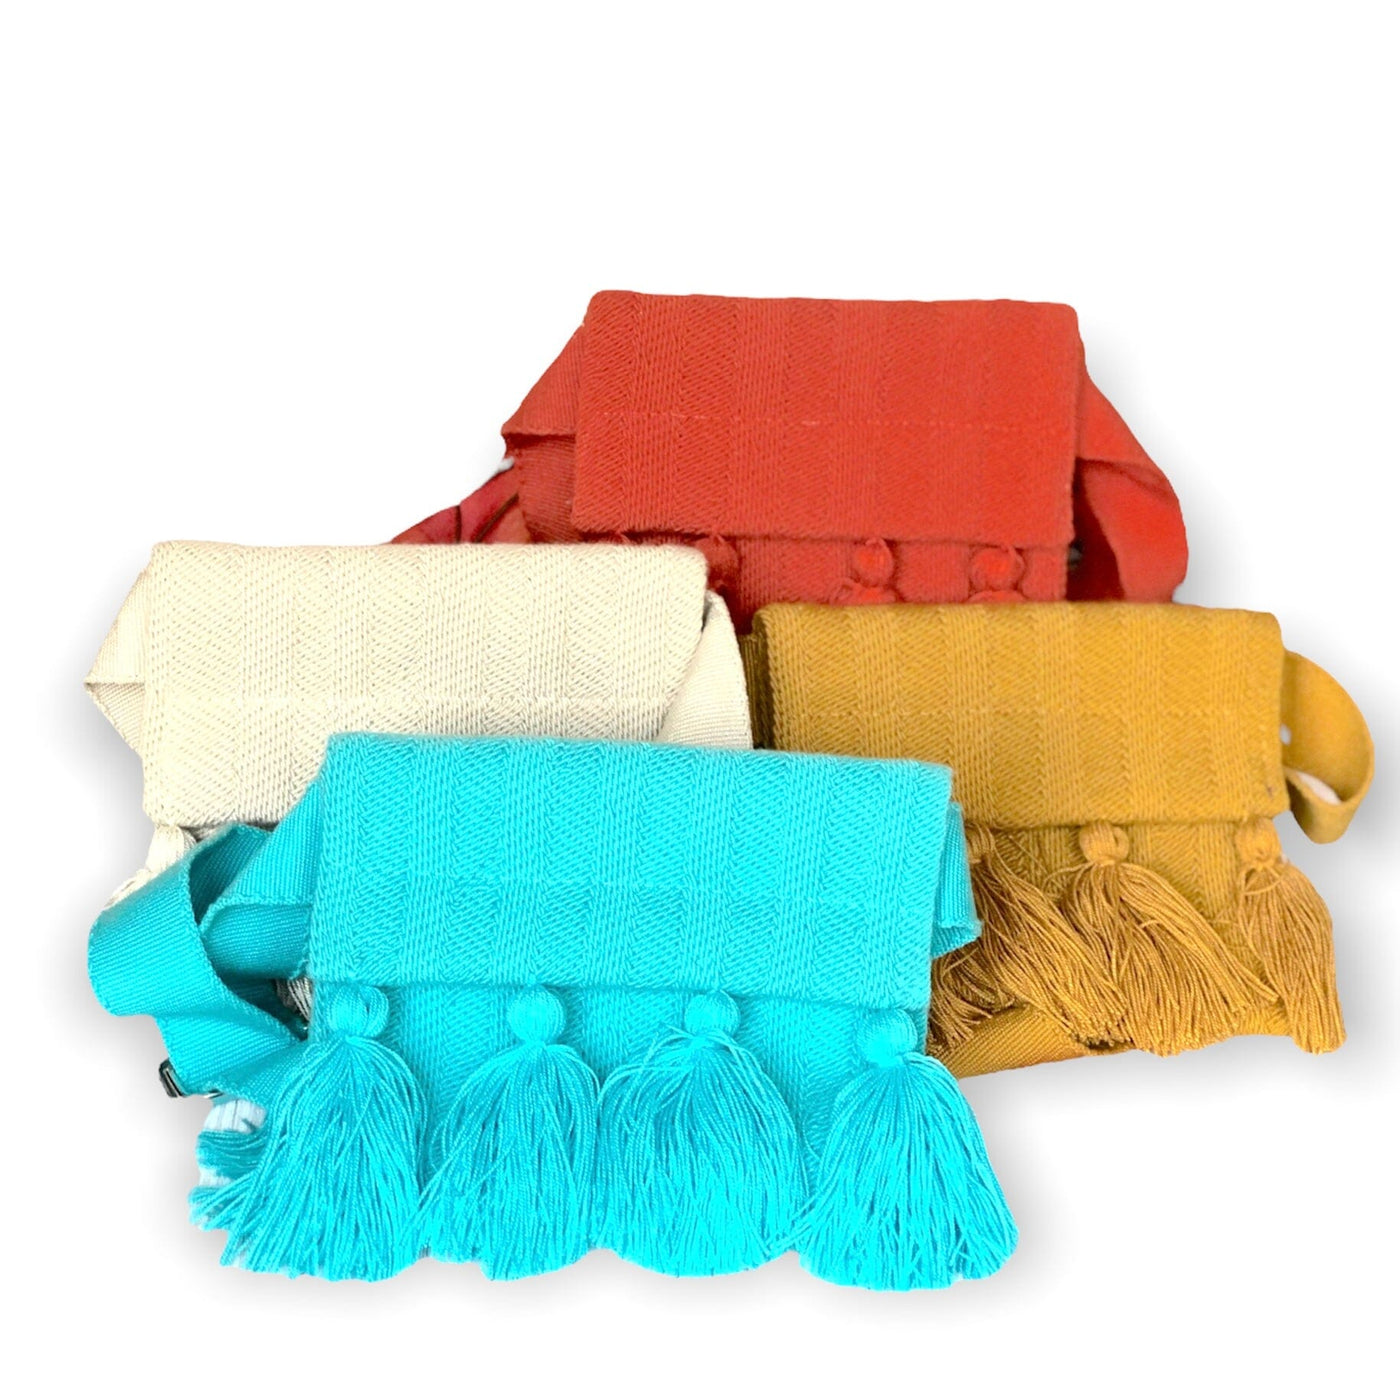 Hand-woven Fanny Pack | Bum bag | Belt Bag | Hands-free travel bag | Colorful 4u